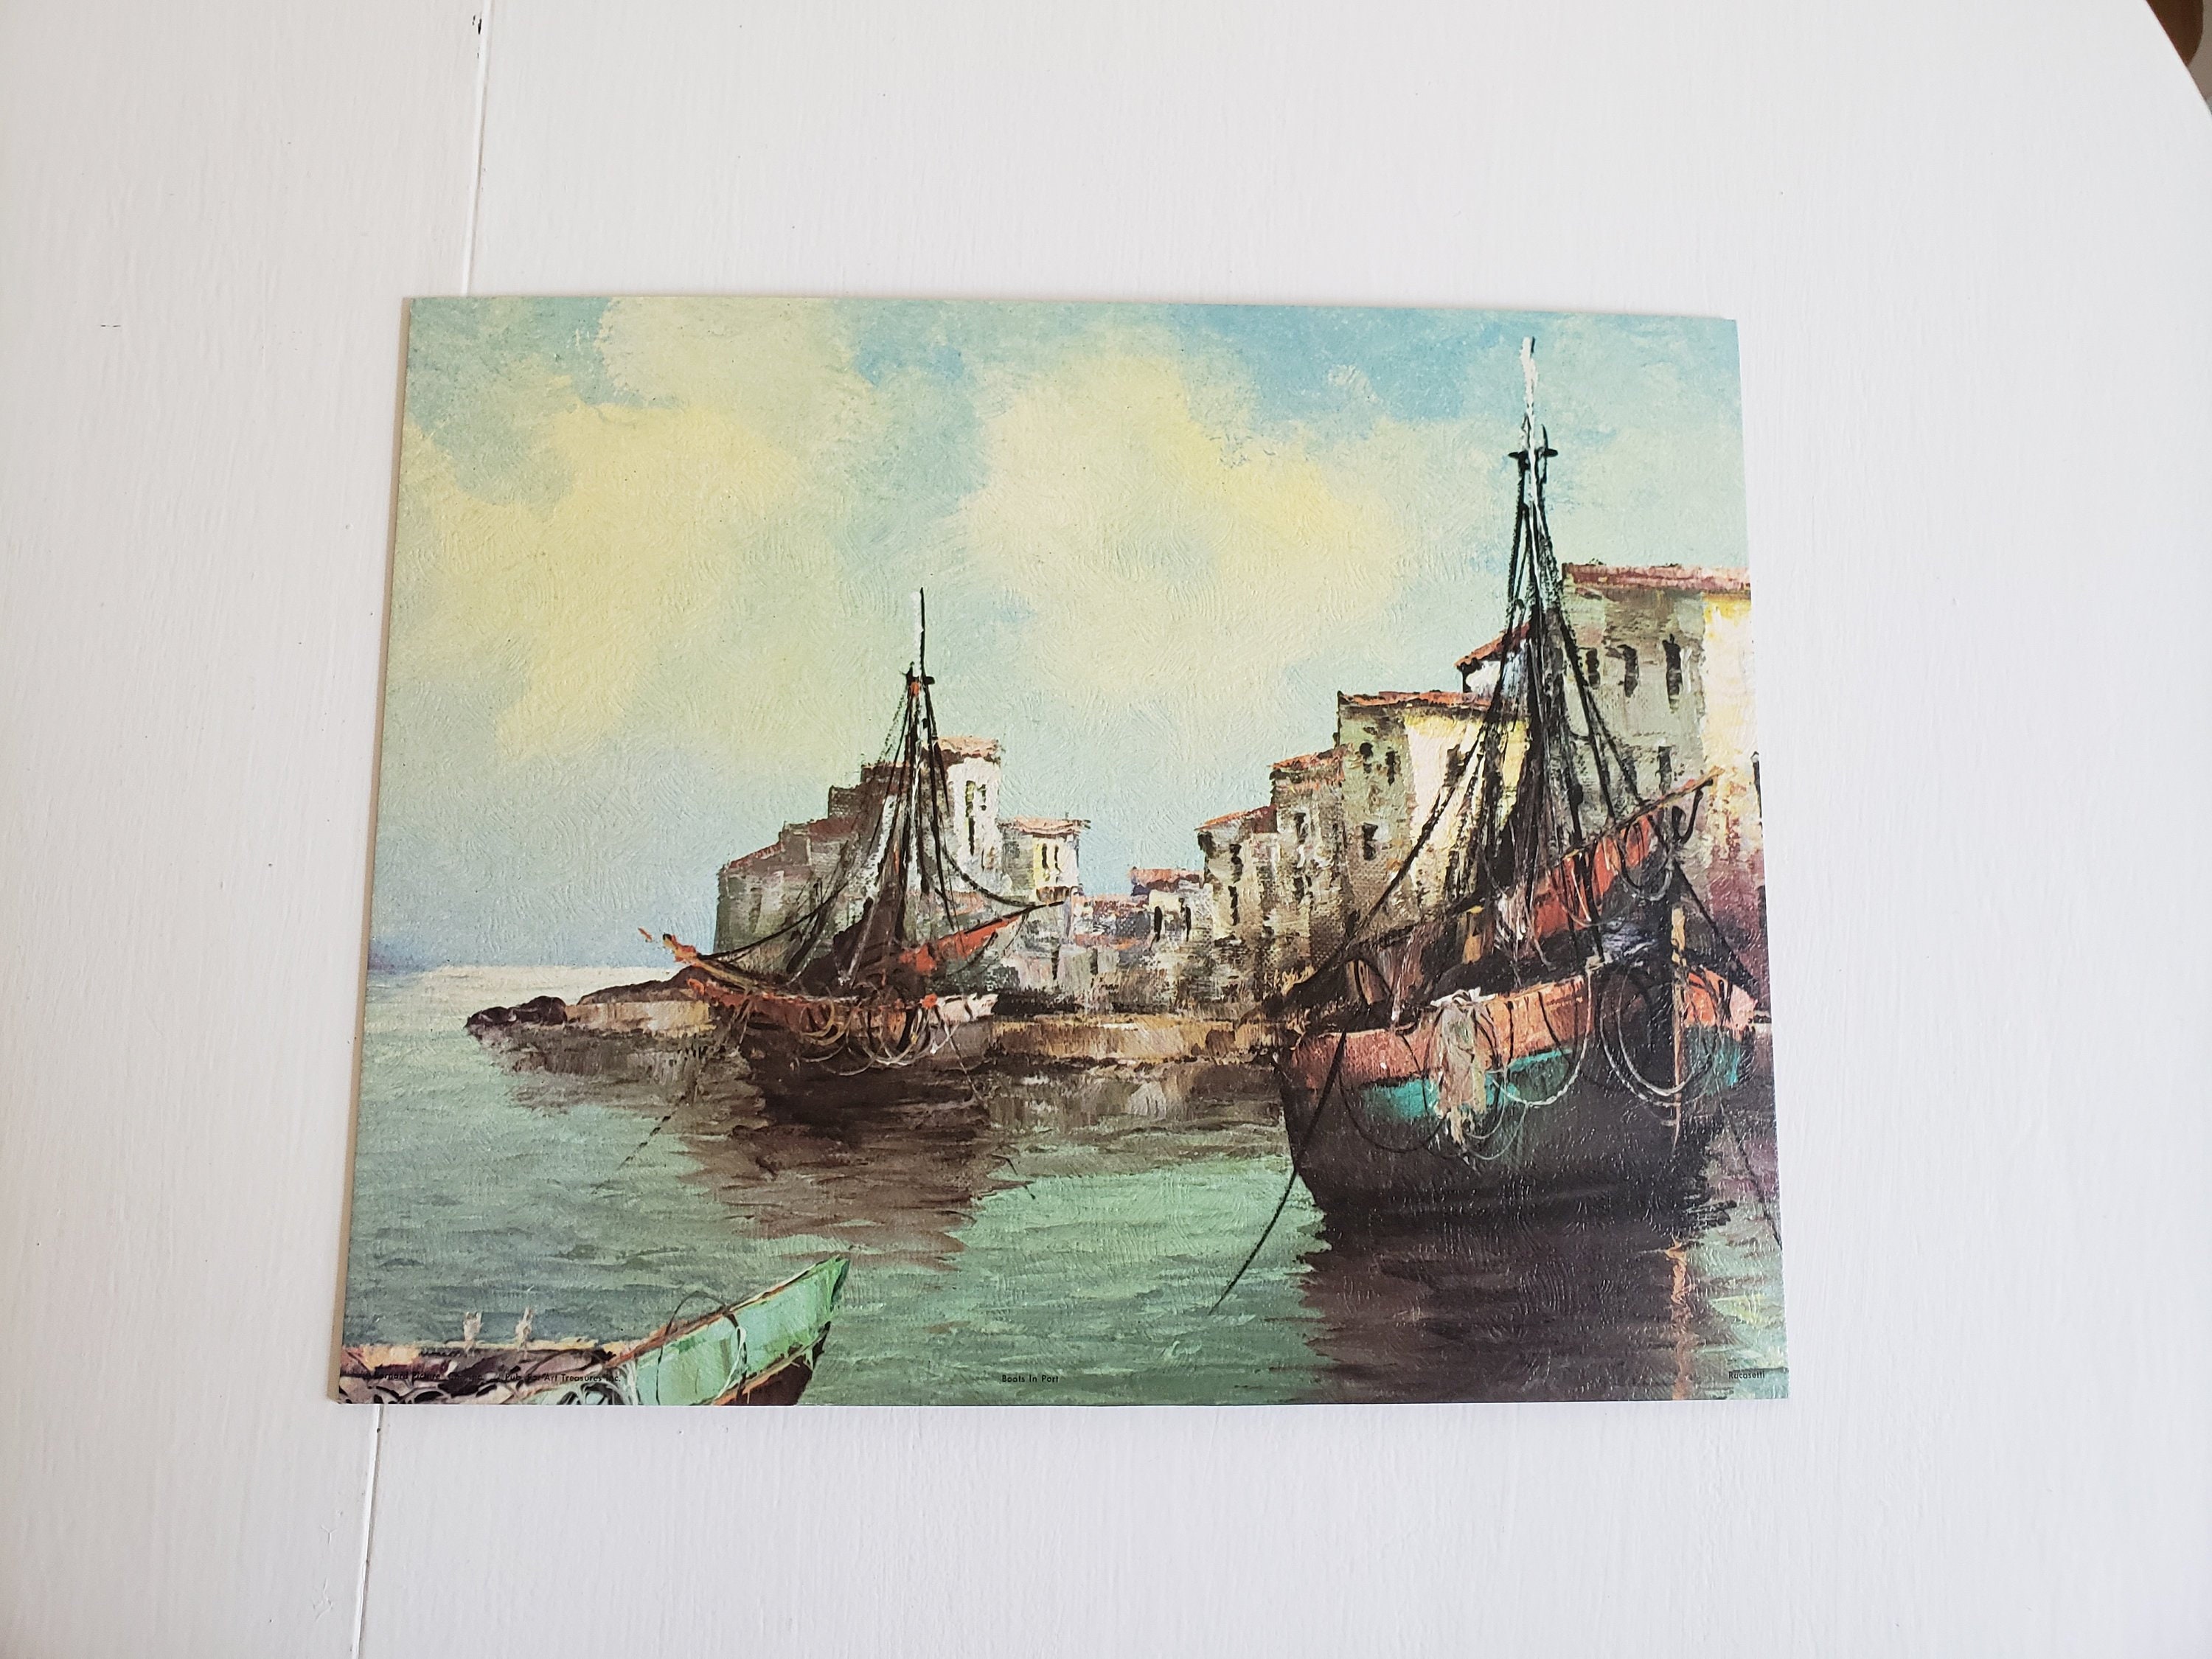 Vintage Boats in Port by Racasetti Print Art Treasures